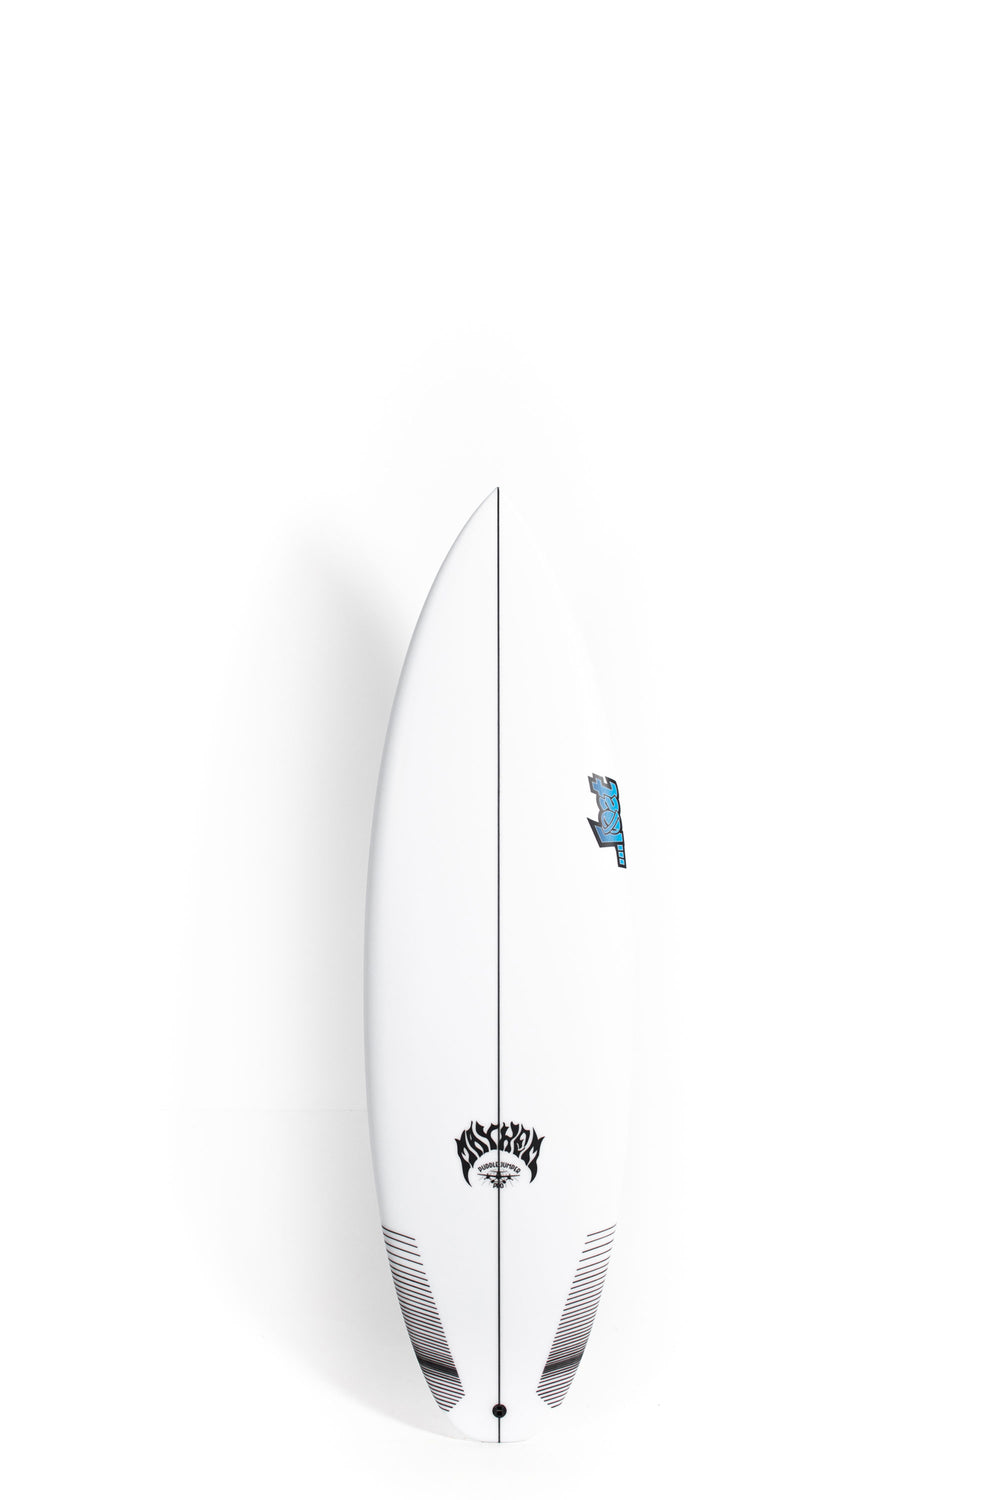 Pukas Surf Shop - Lost Surfboard - PUDDLE JUMPER-PRO by Matt Biolos - 6'0